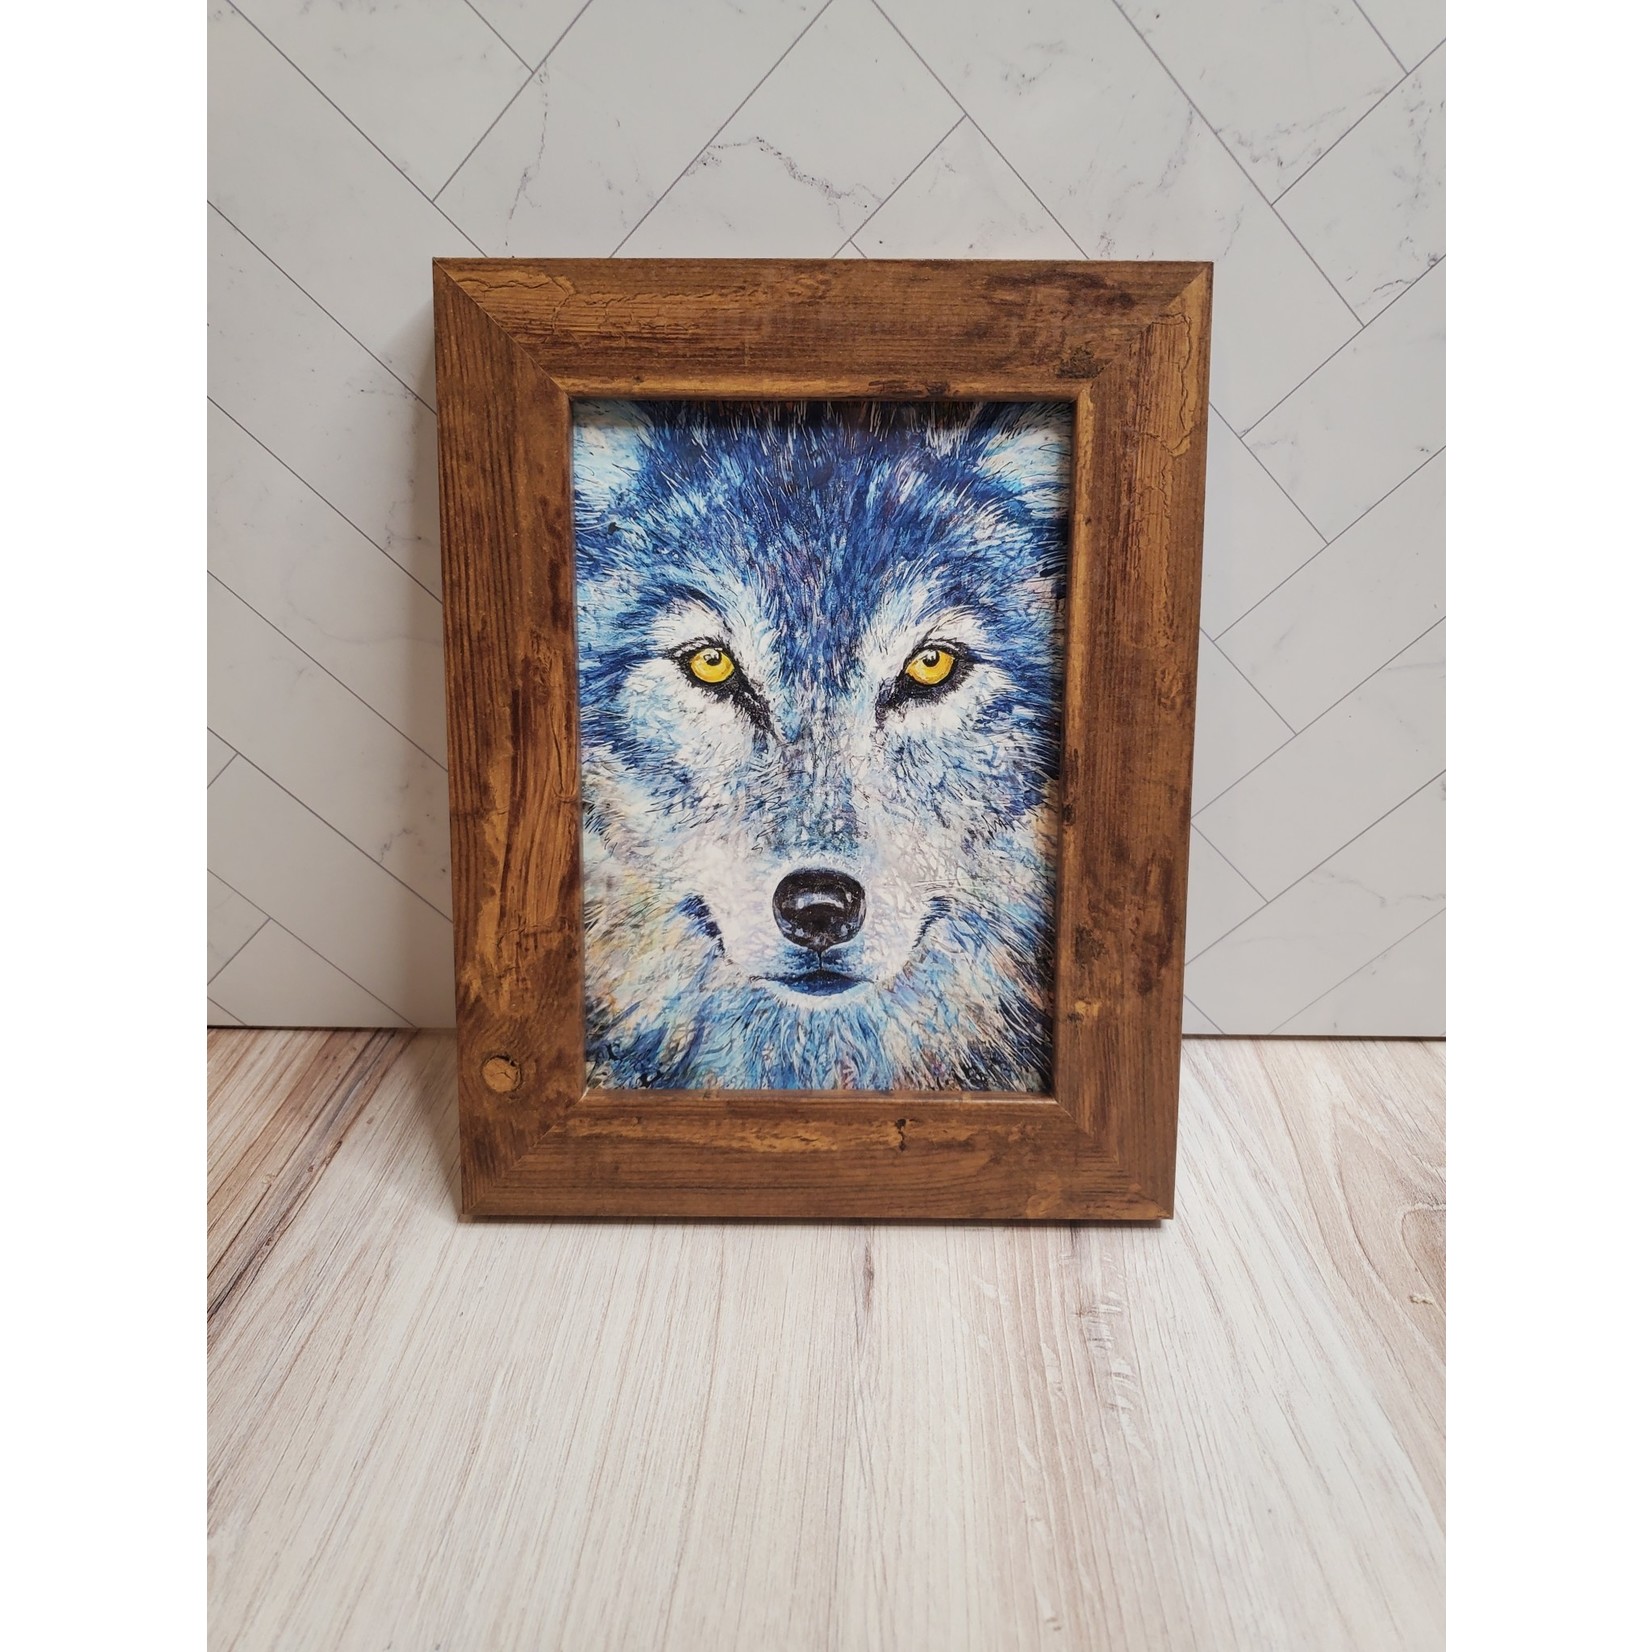 Sara L Smith "Wolfish I" - framed giclee print